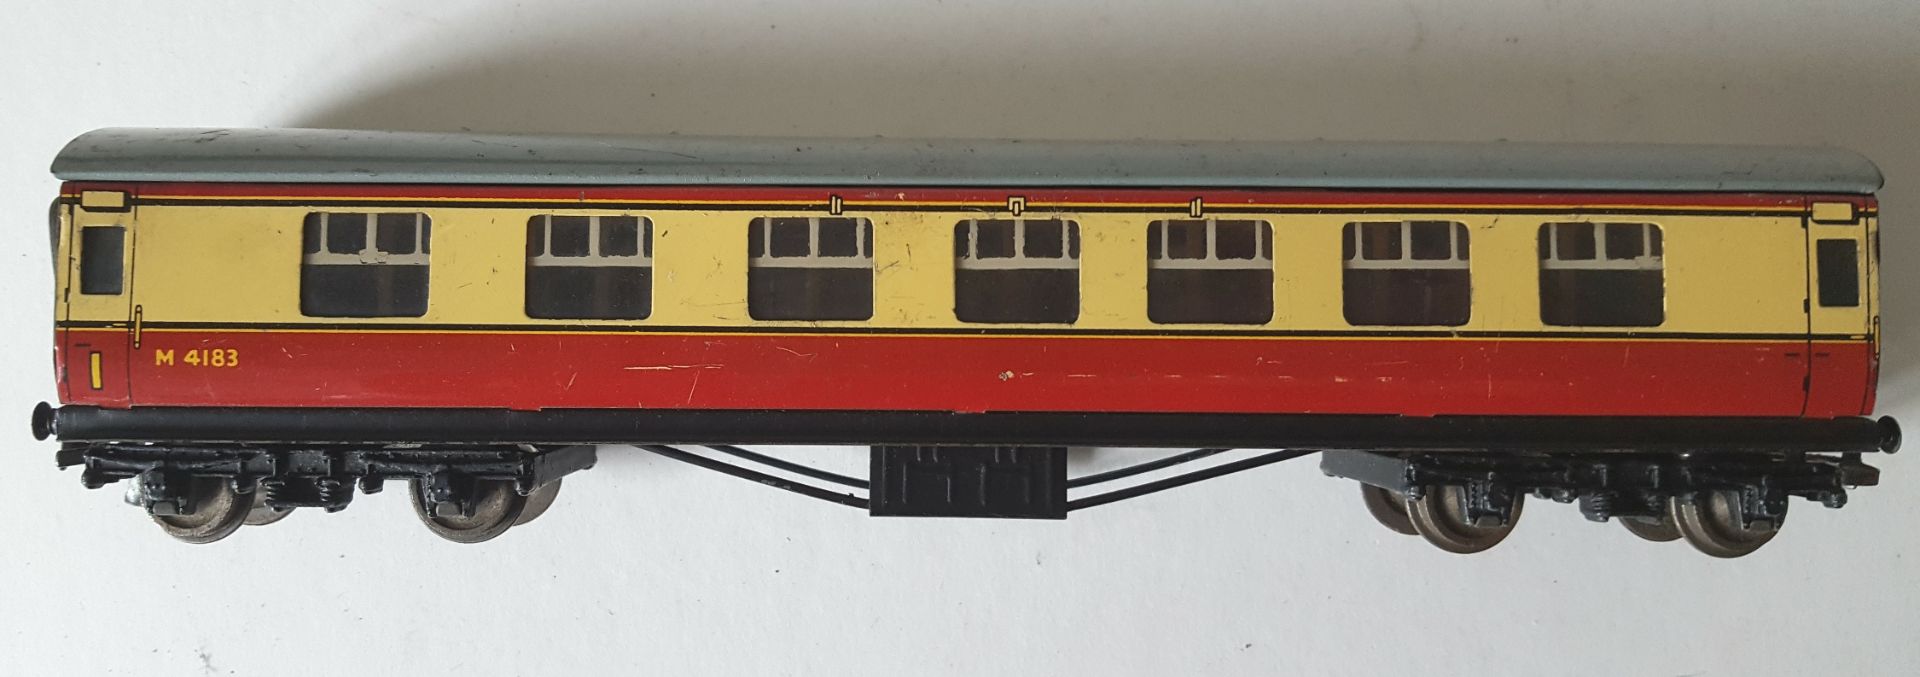 Vintage Retro 2 x Tin Plate Model Train Coaches 00 Gauge Hornby Dublo Meccano - Bild 4 aus 4